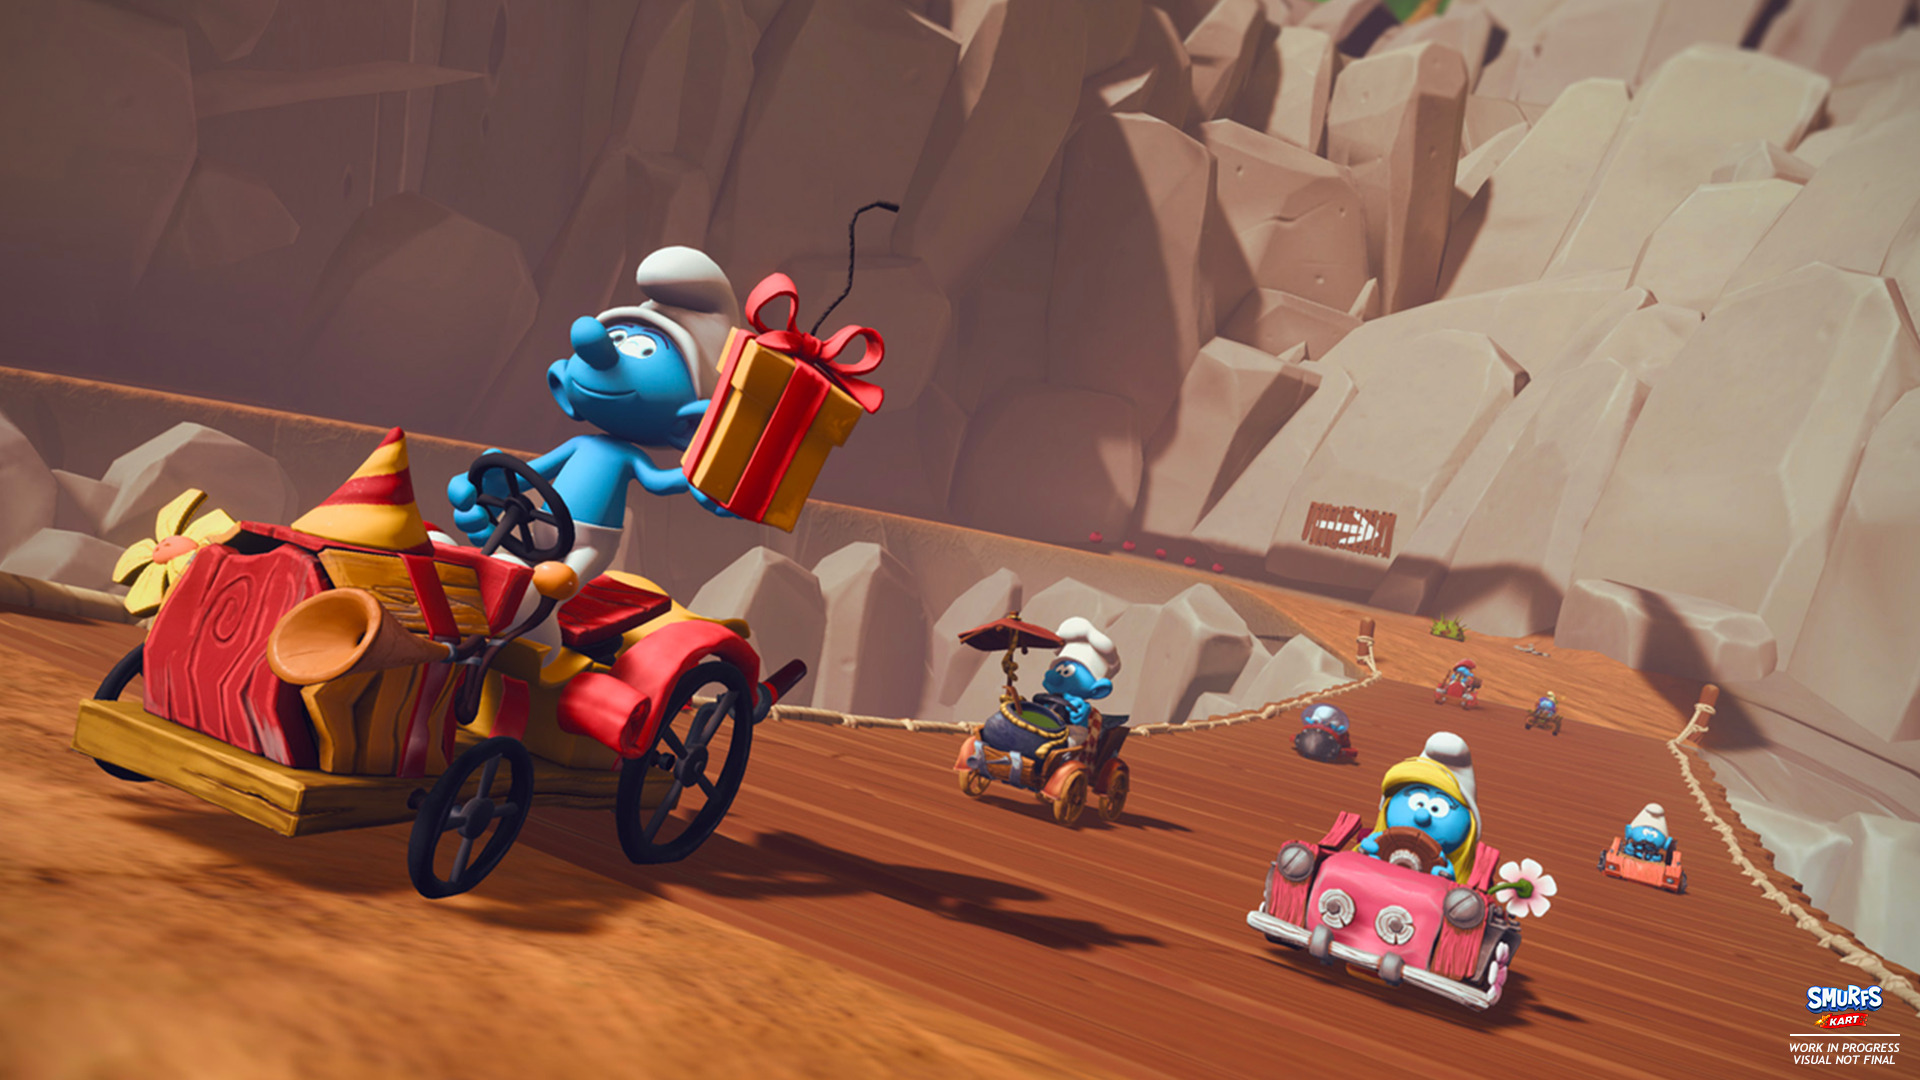 Smurfs Kart announced for Switch 